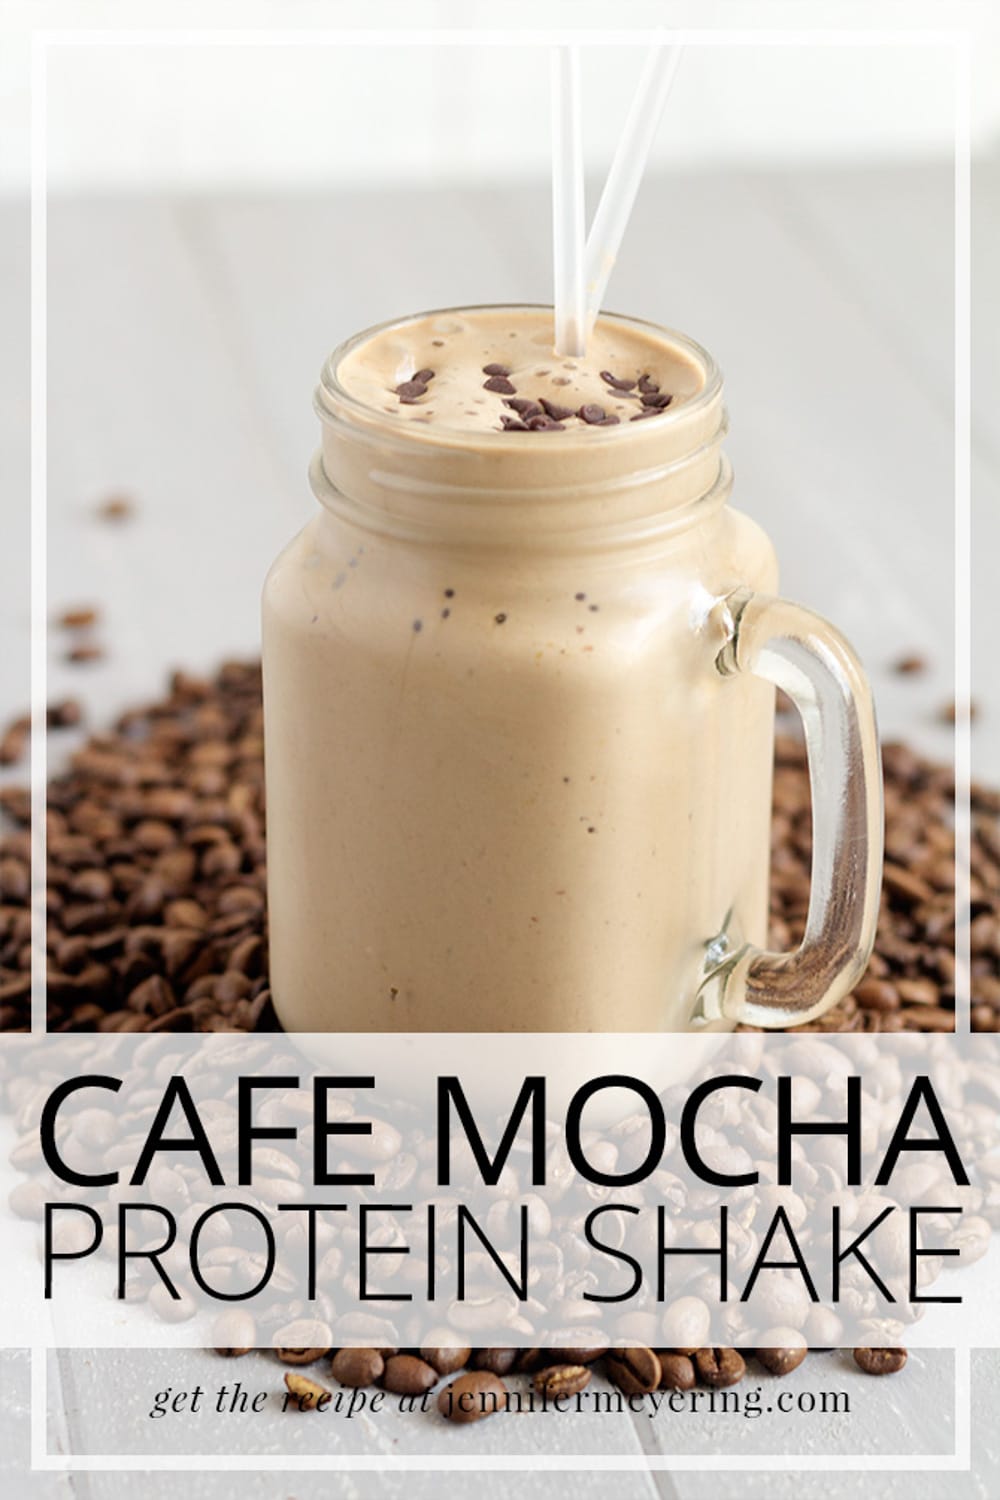 Cafe Mocha Protein Shake - JenniferMeyering.com